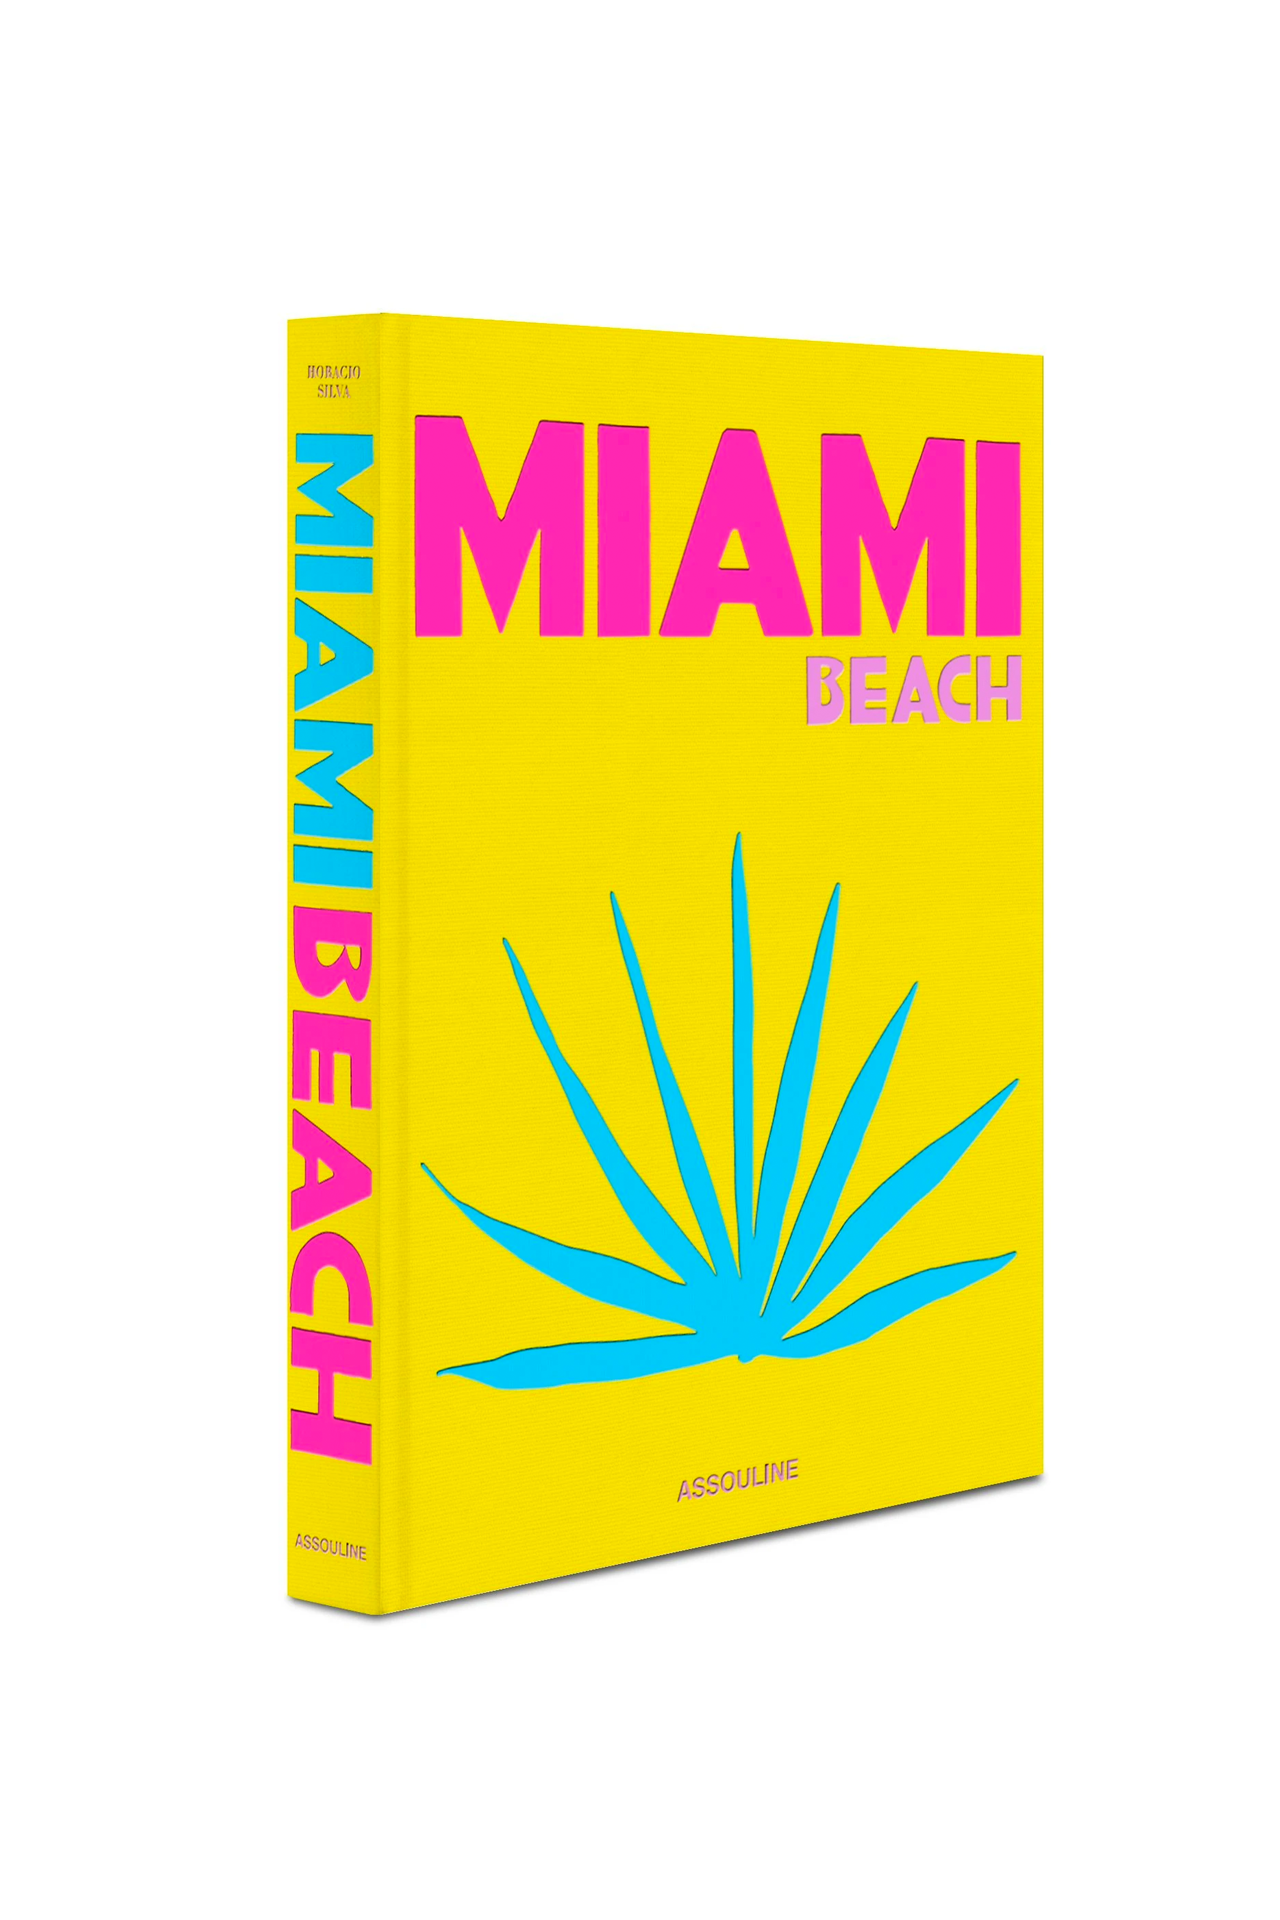 Assouline Miami Beach Book Angled Spine Image (4640774586483)